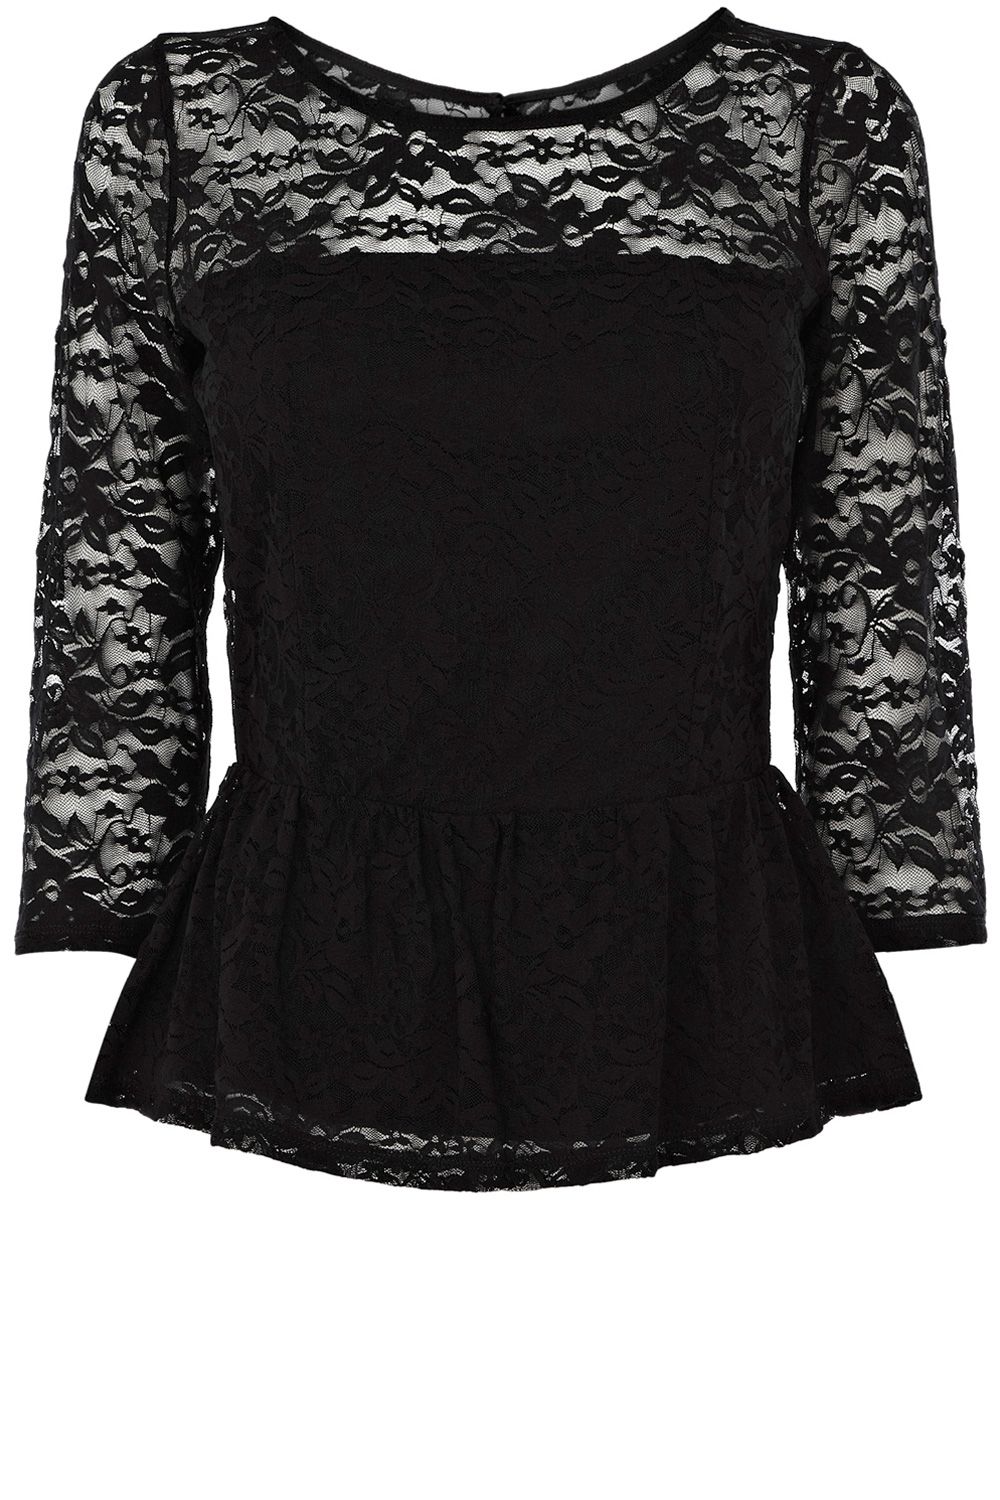 Oasis Lace Long Sleeve Peplum Top in Black | Lyst